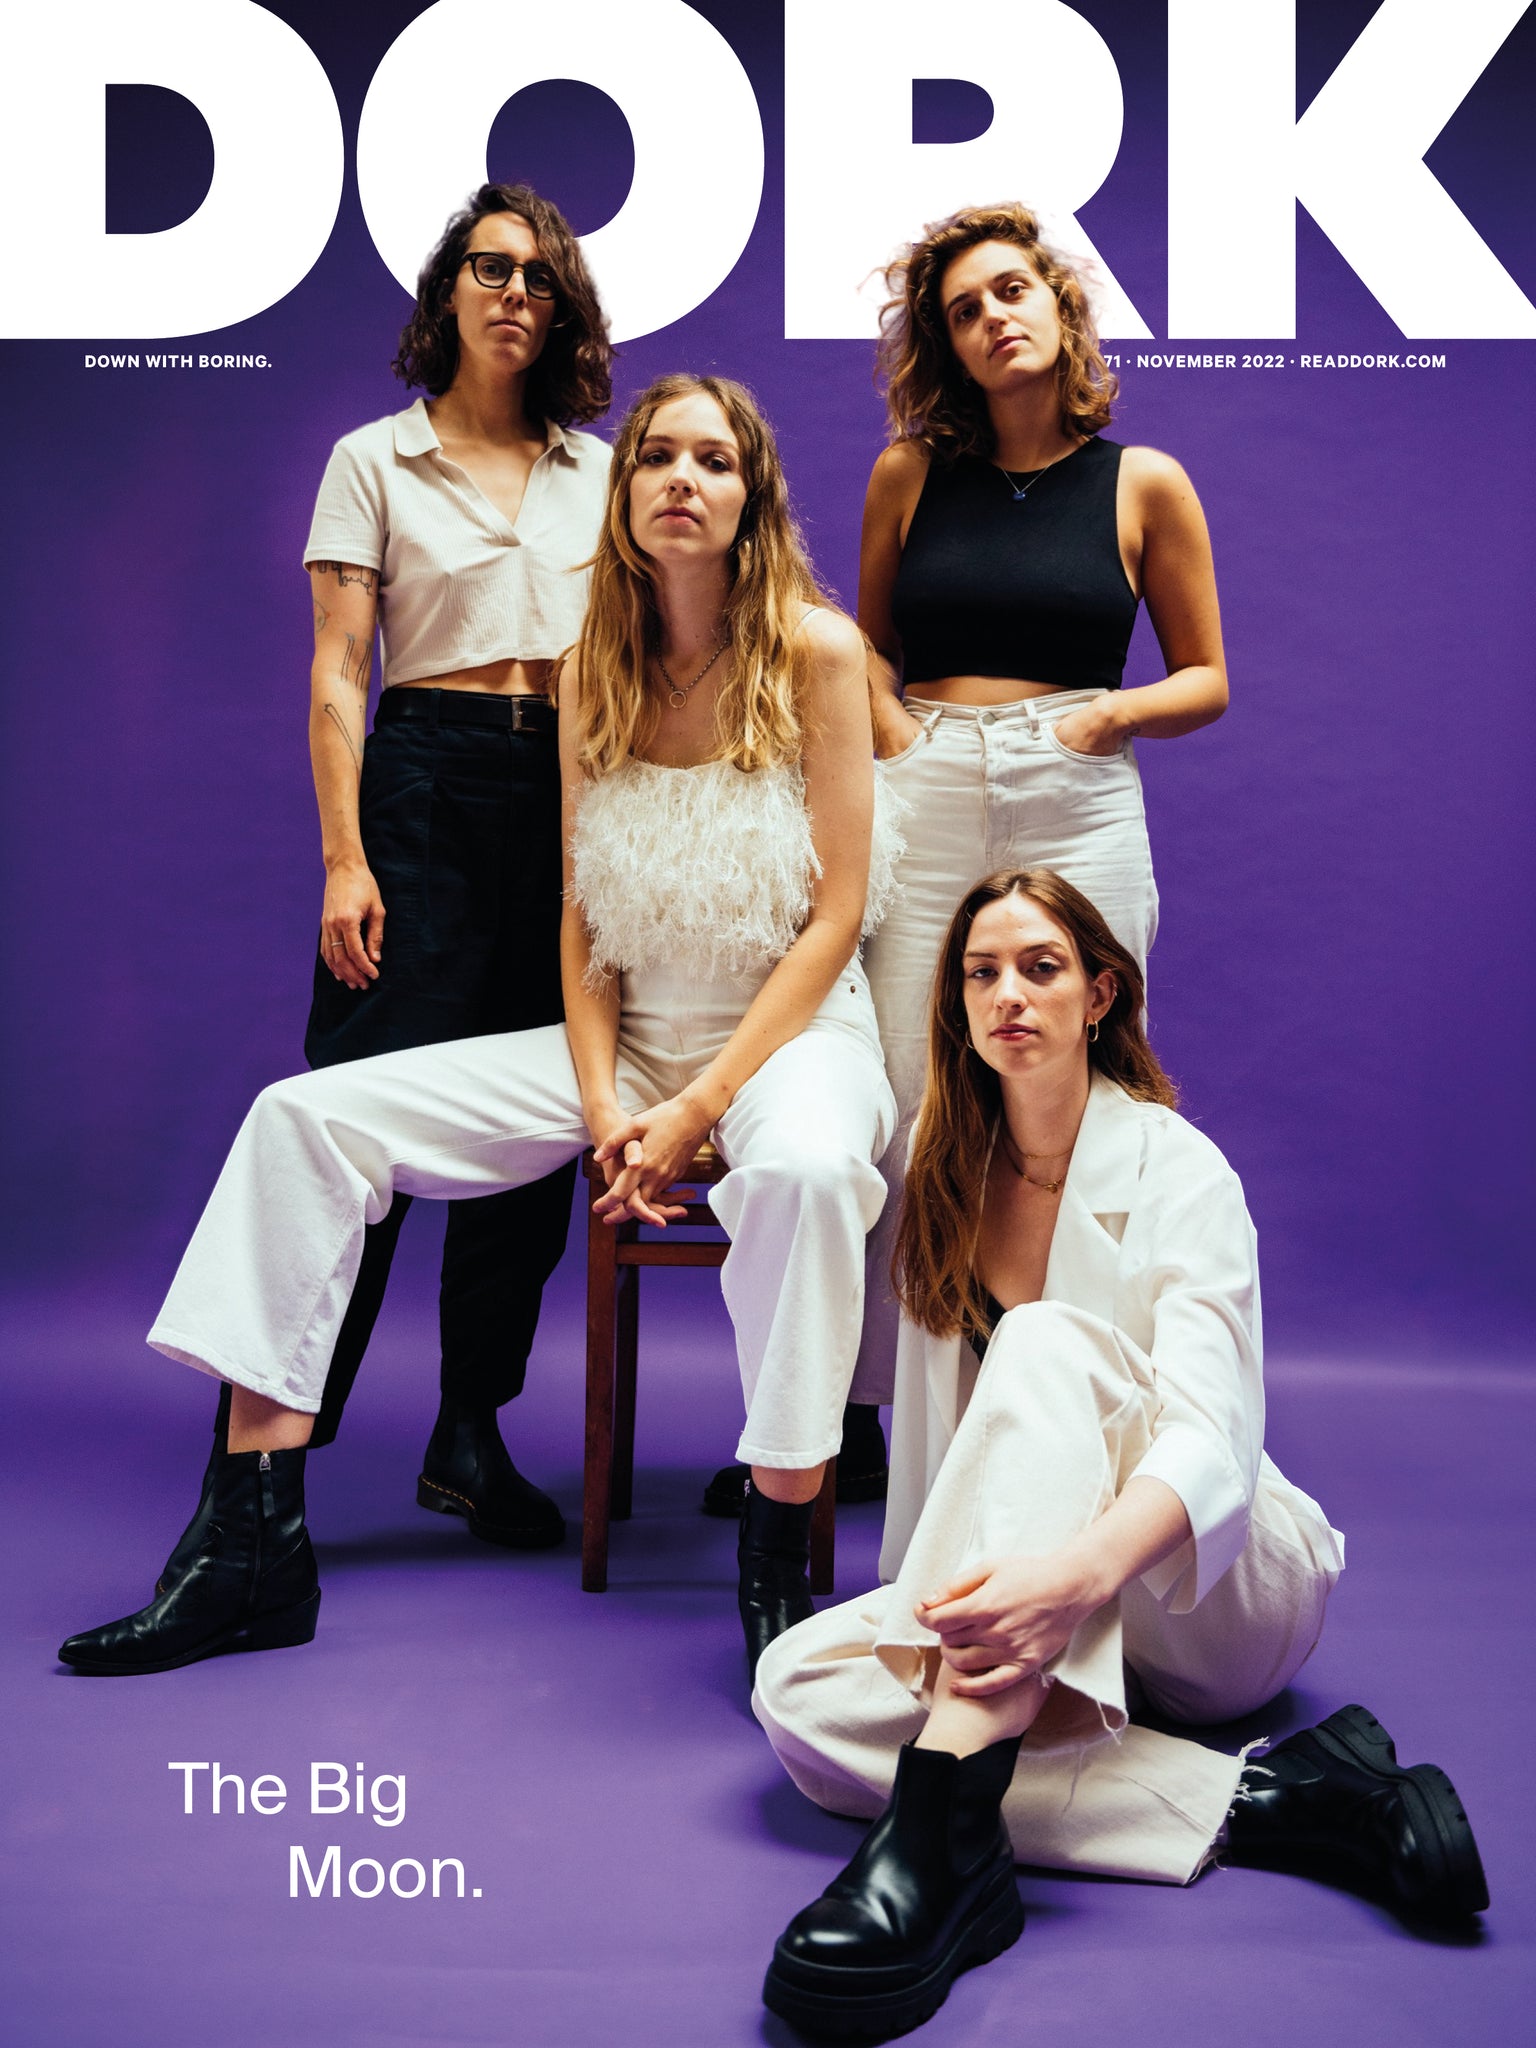 Dork, November 2022 (The Big Moon cover)